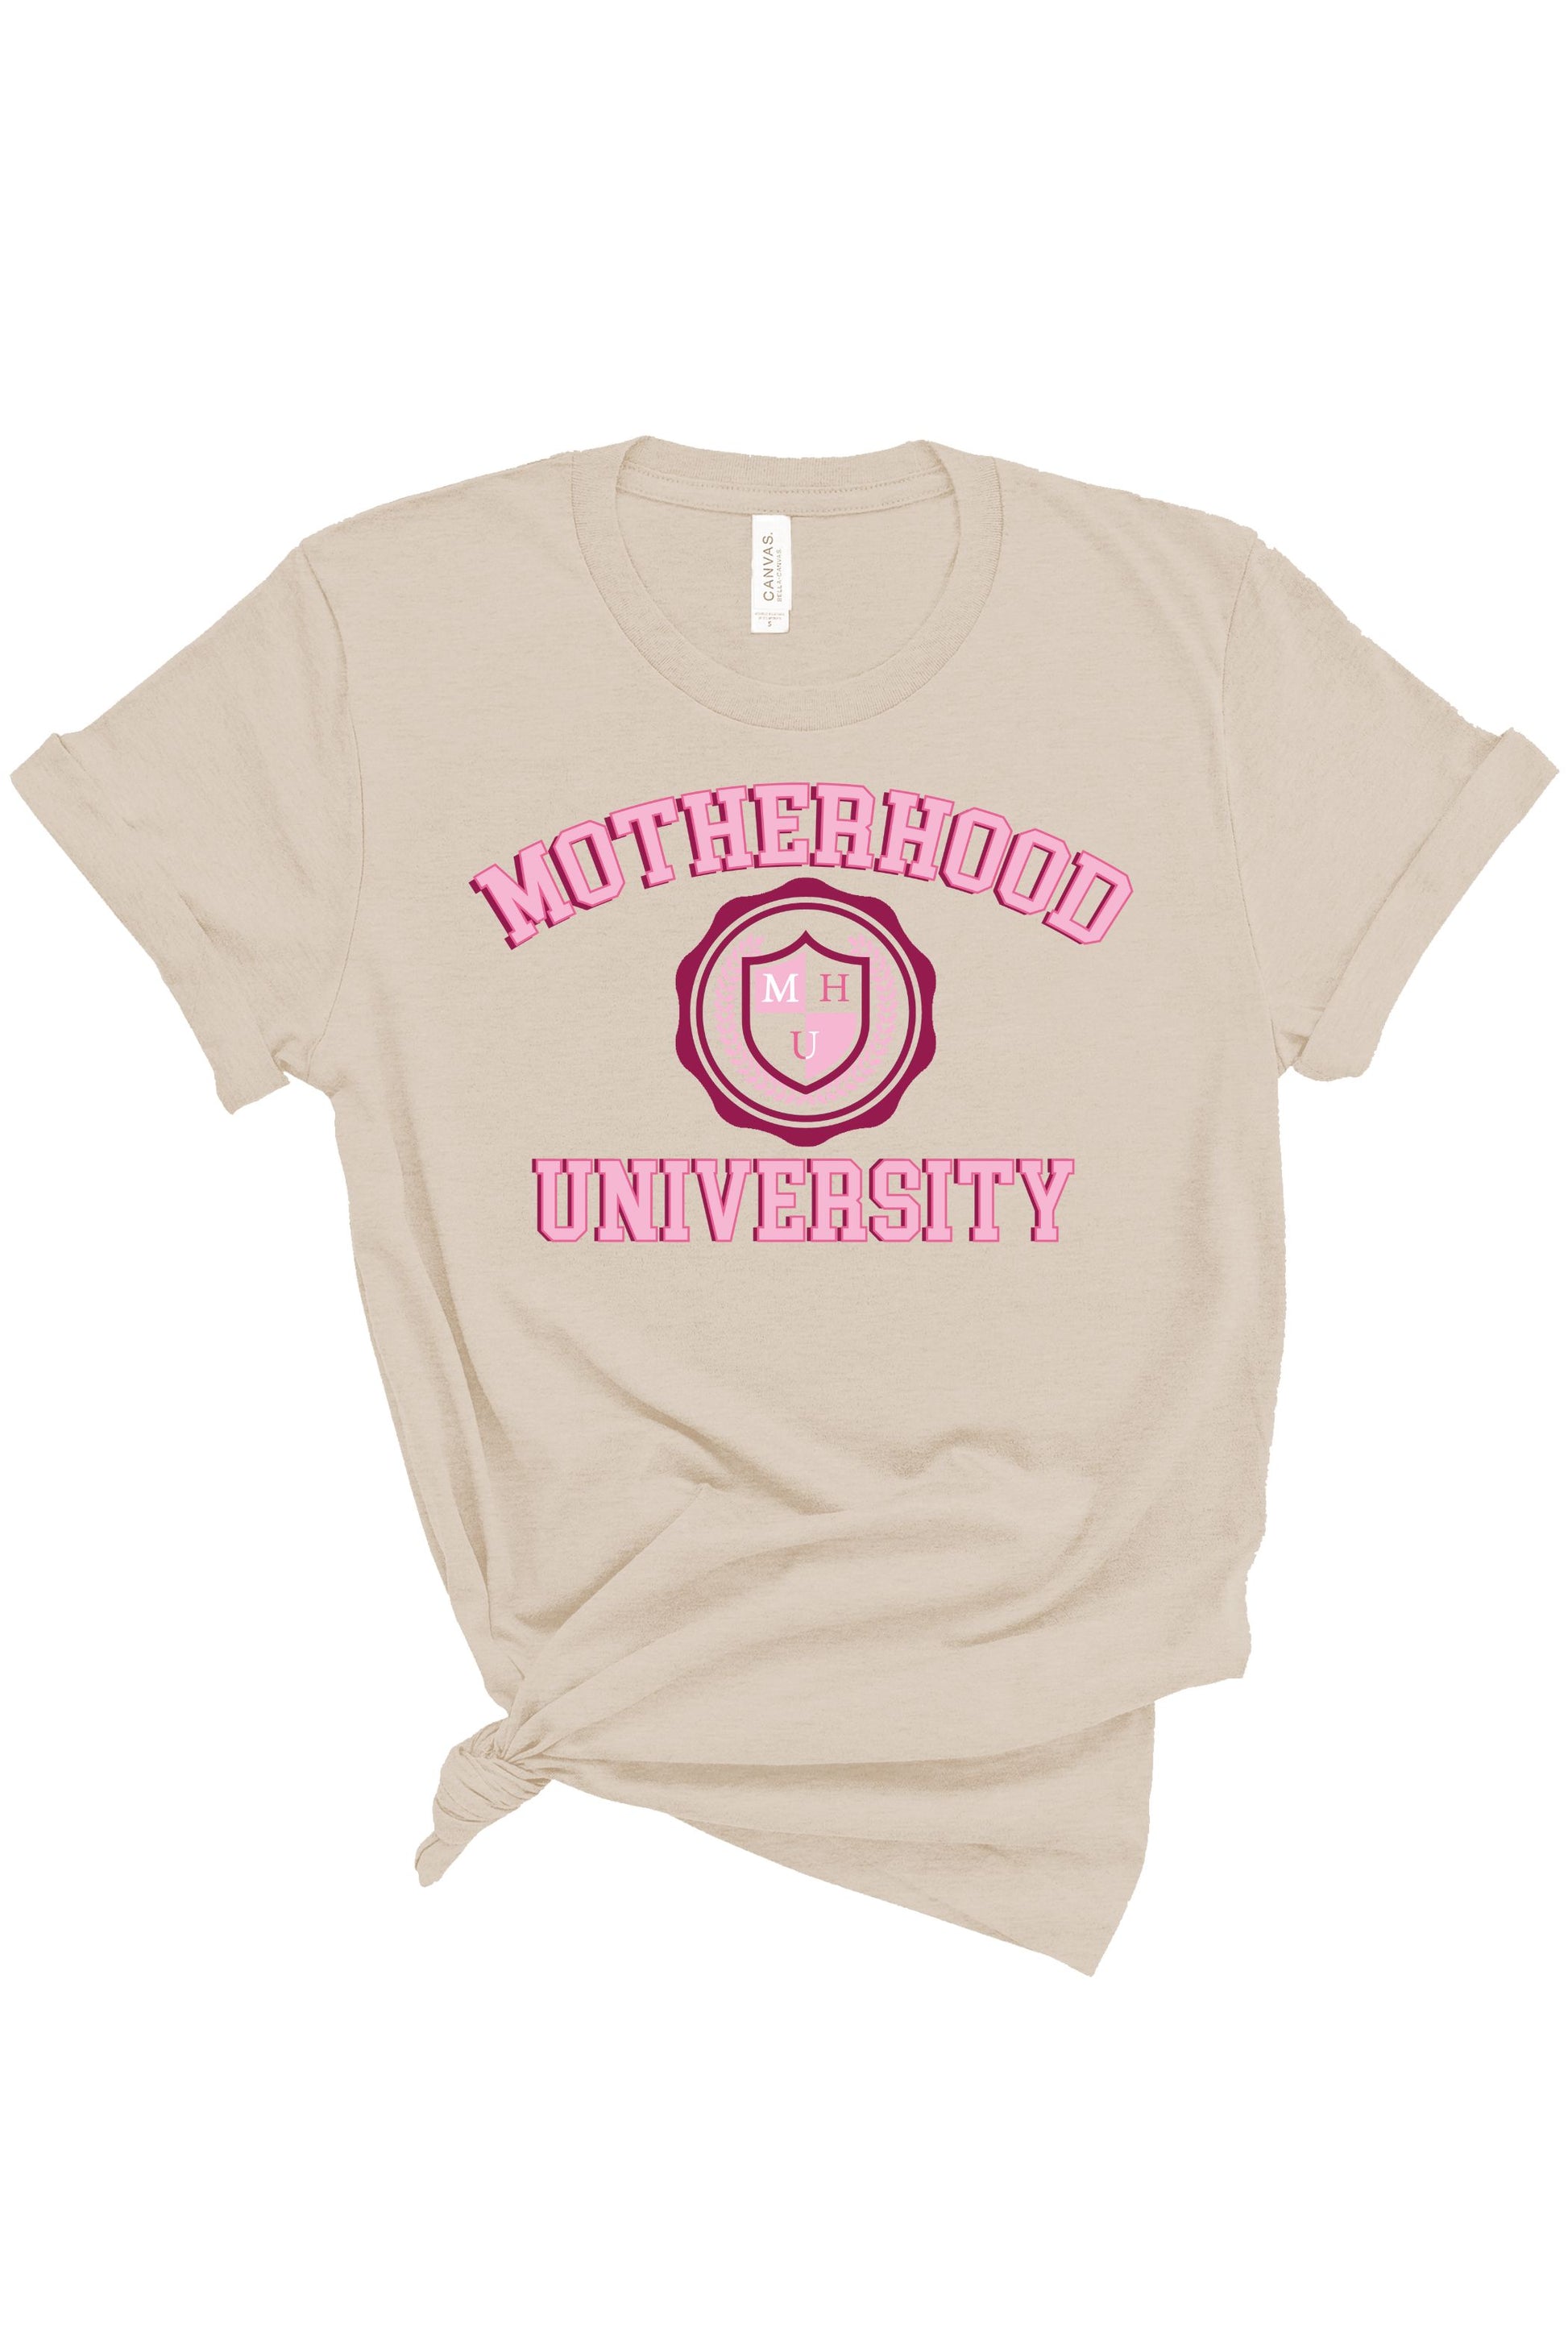 Motherhood University | Tee | Adult-Sister Shirts-Sister Shirts, Cute & Custom Tees for Mama & Littles in Trussville, Alabama.